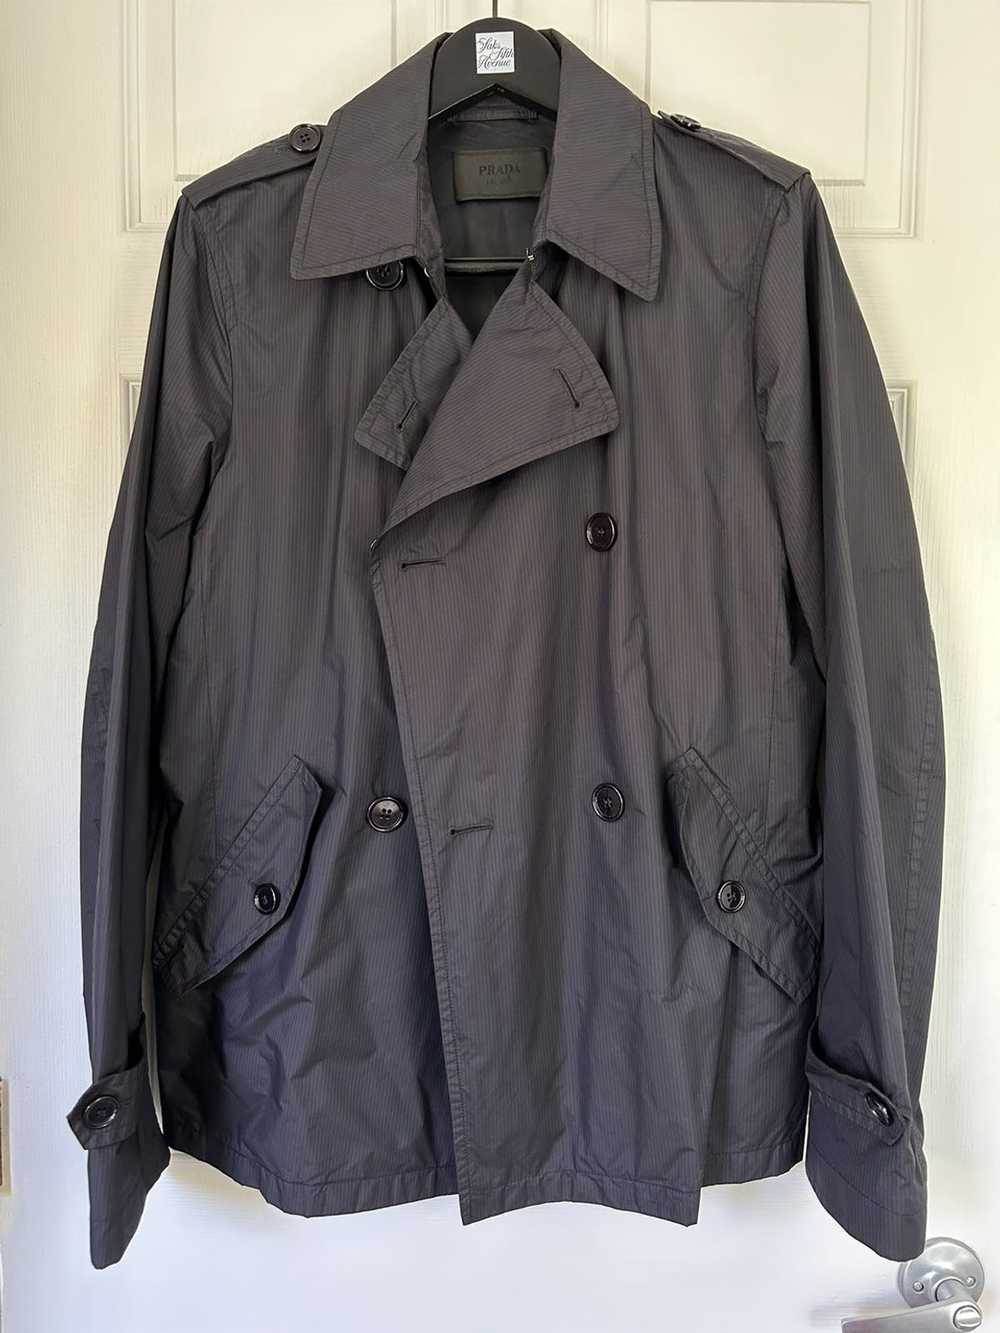 Prada Prada Raincoat Jacket - image 1